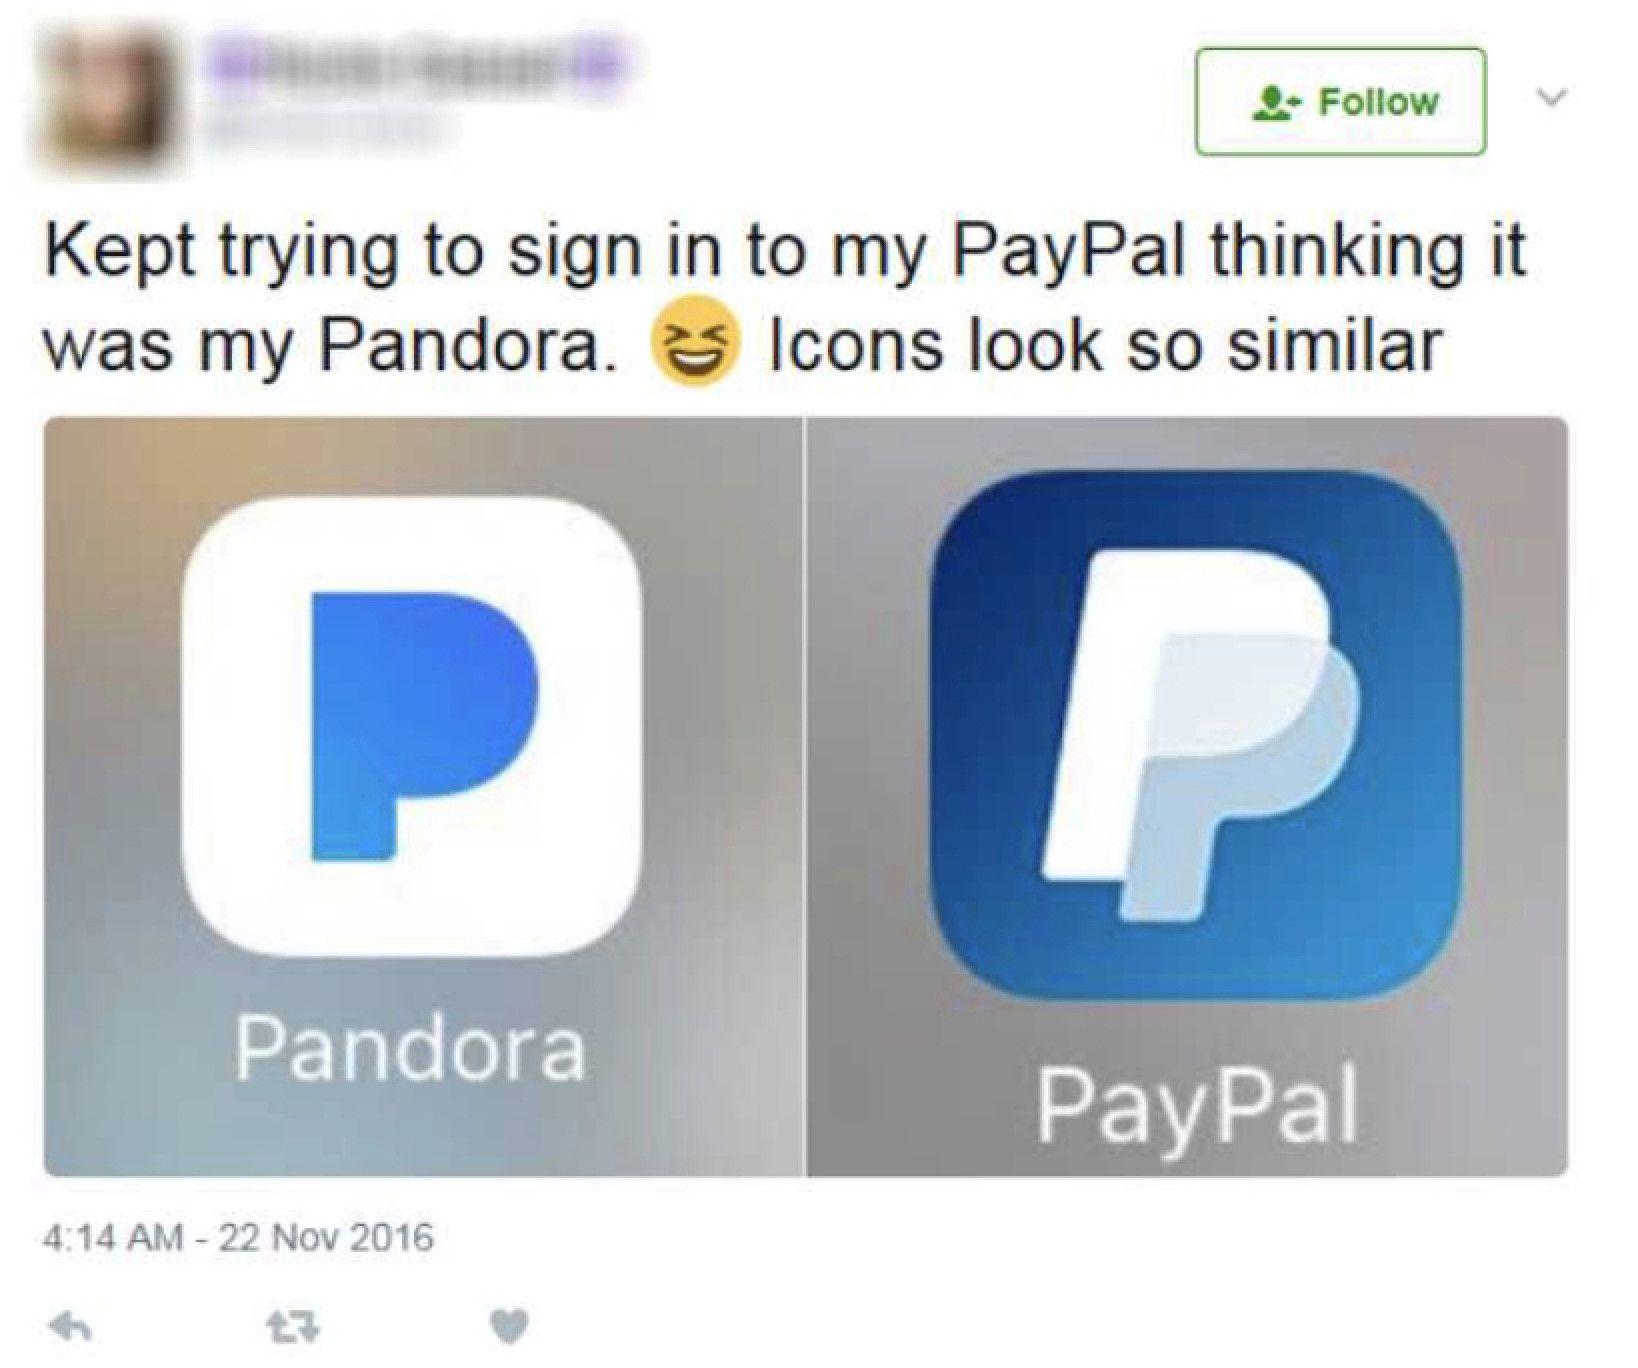 New Pandora Logo - PayPal sues Pandora over similar logo